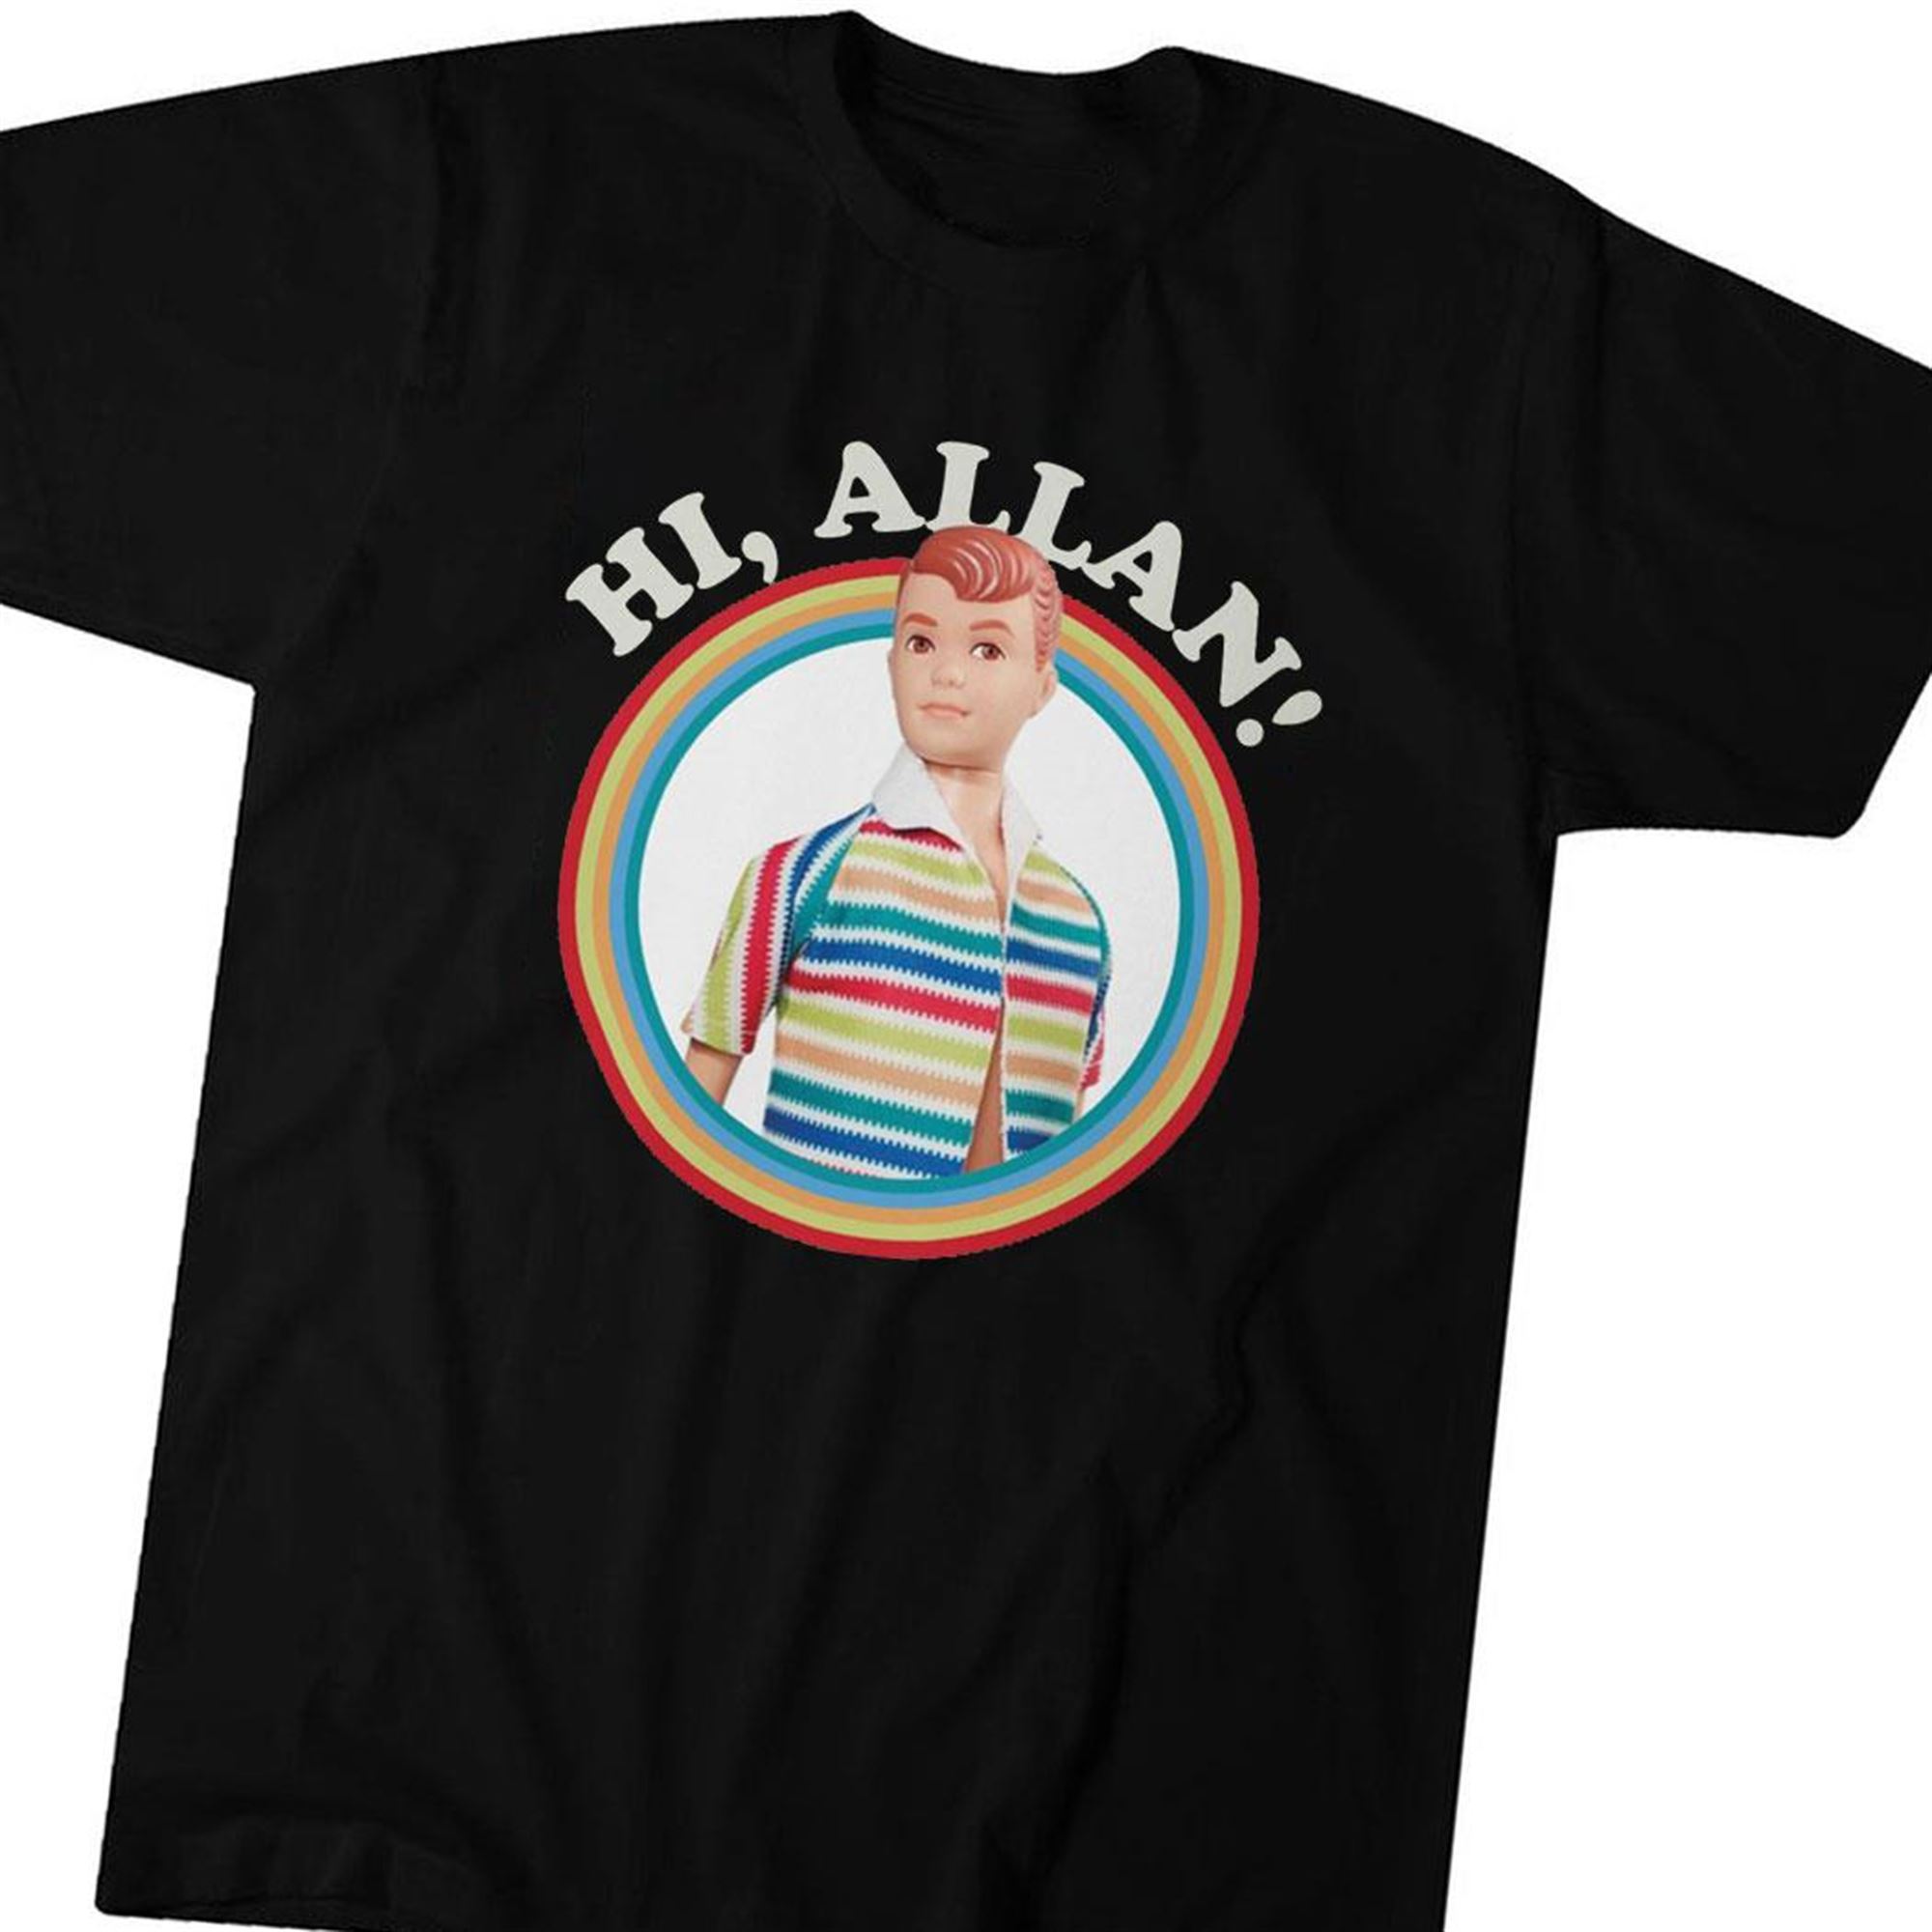 Barbie the Movie - Hi Allan - Men's Short Sleeve Graphic T- Shirt